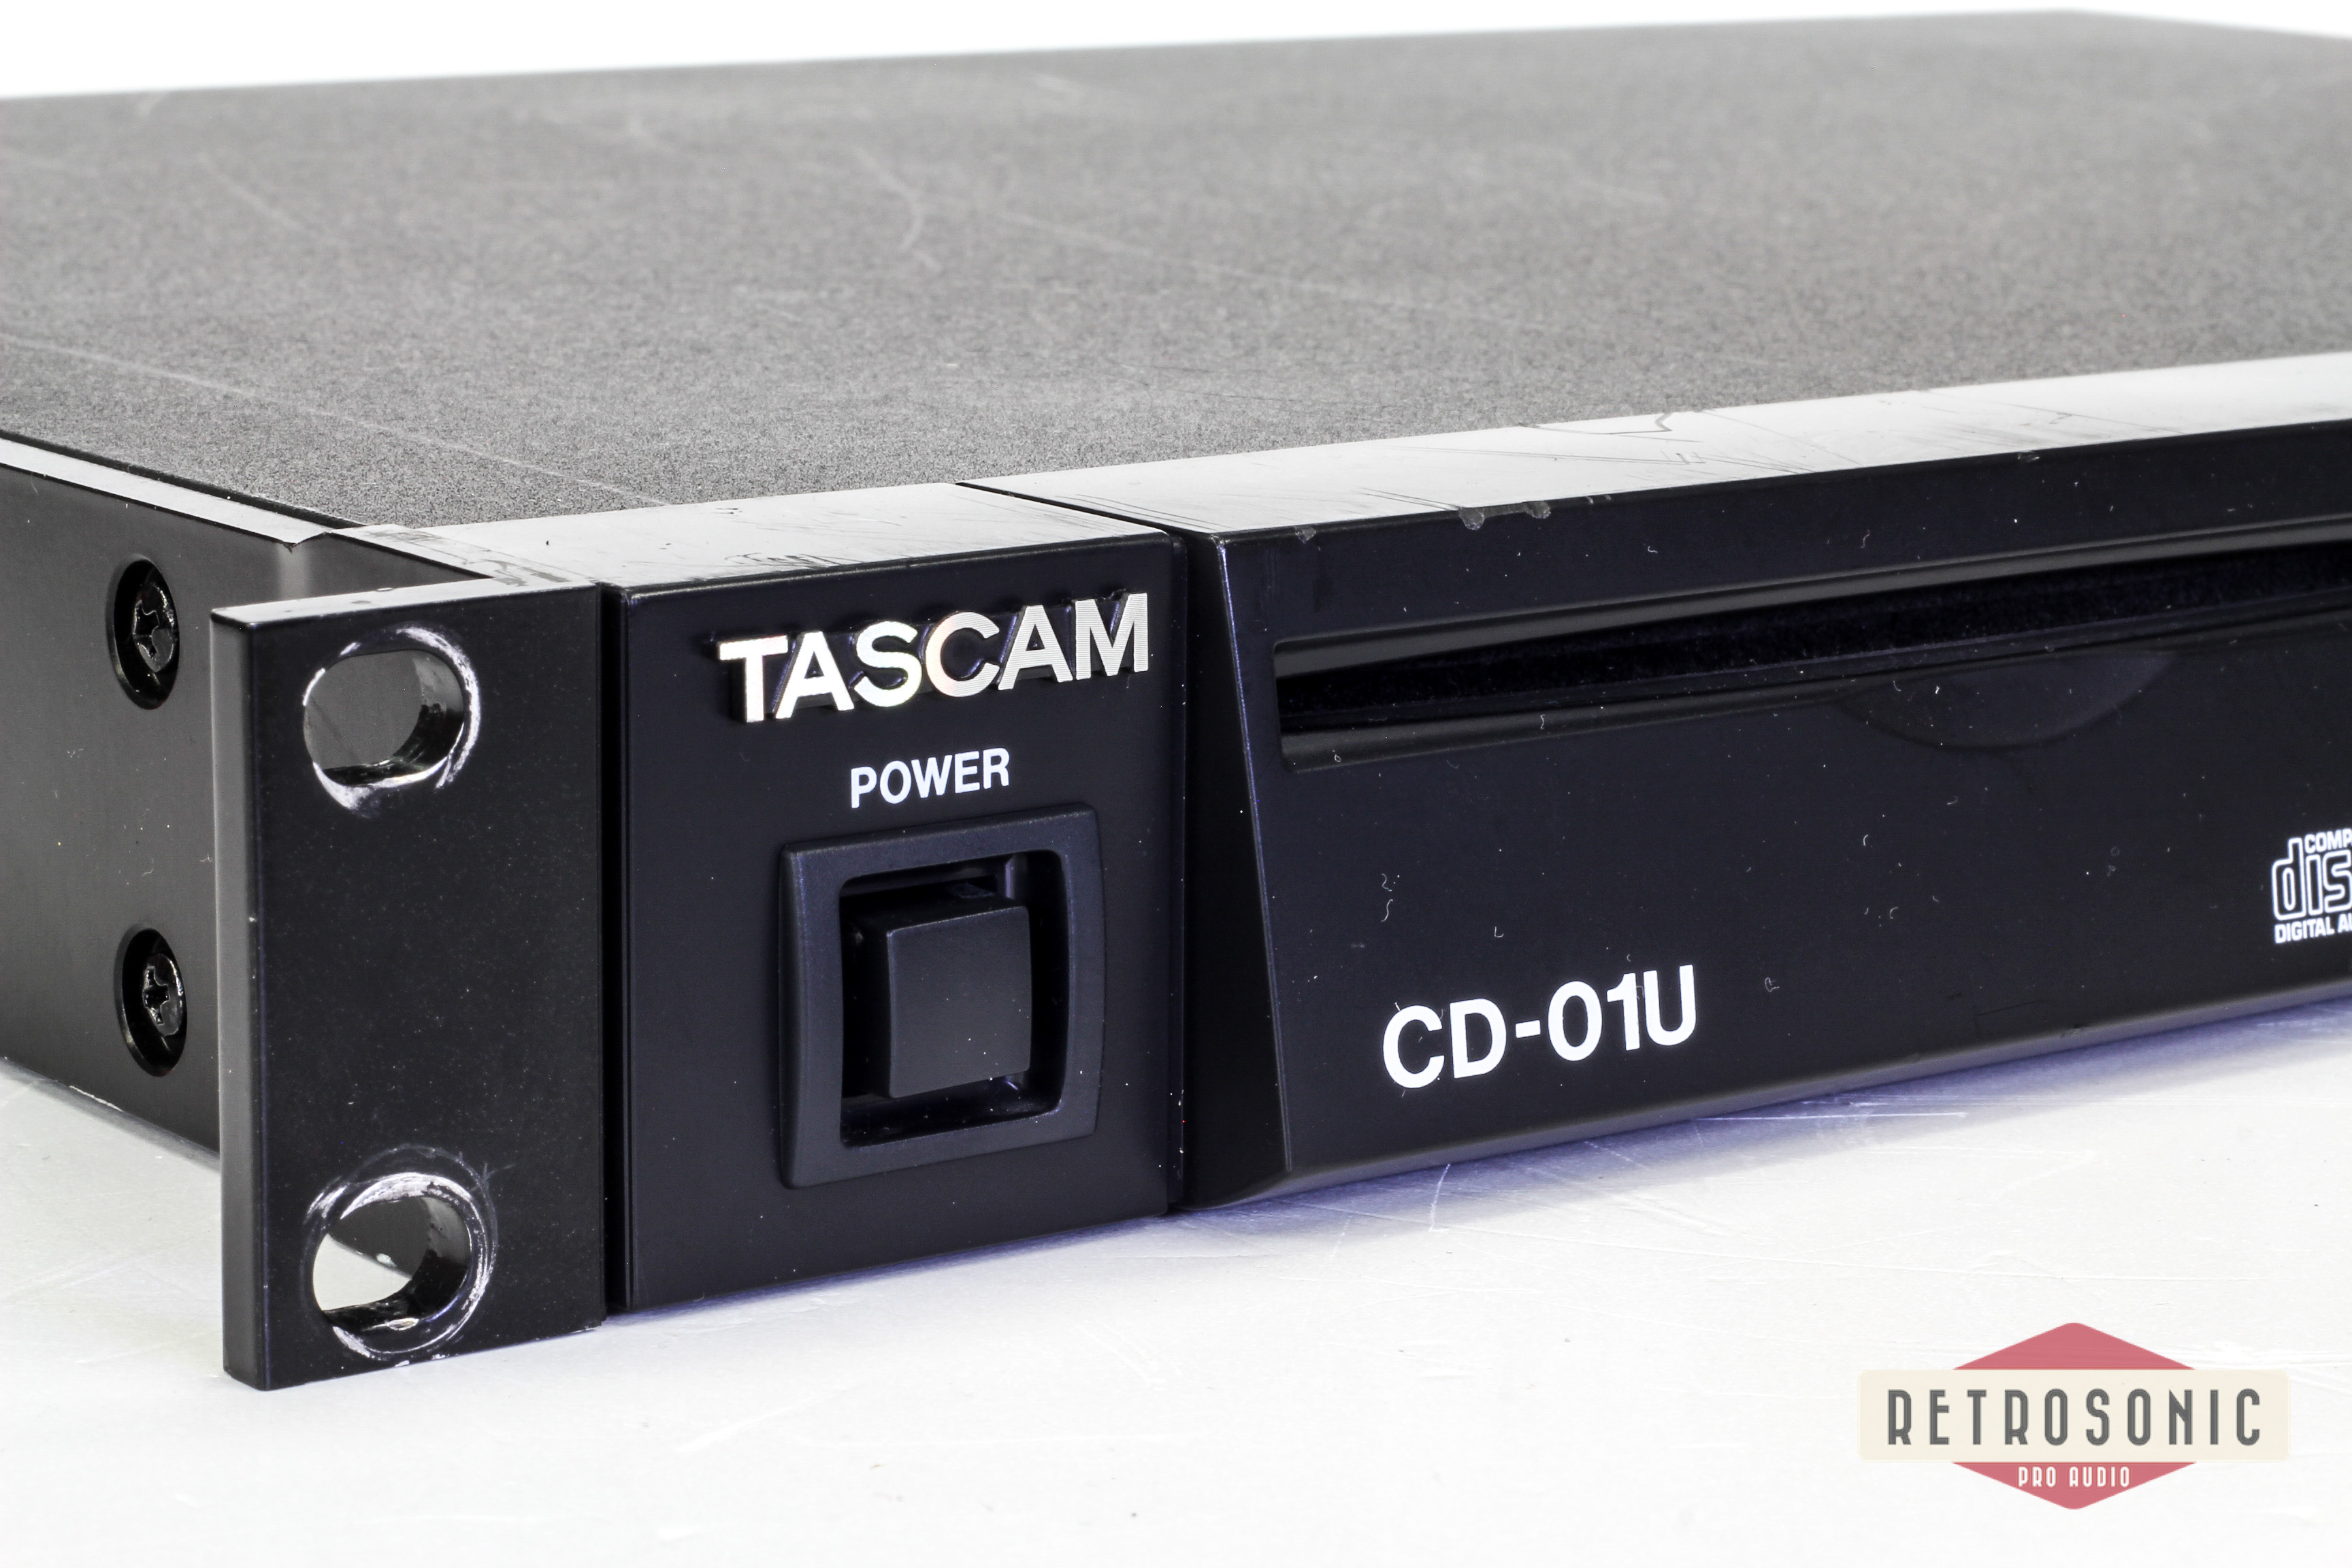 Tascam CD01U CD-player, 1Unit 19-inch Rack #1